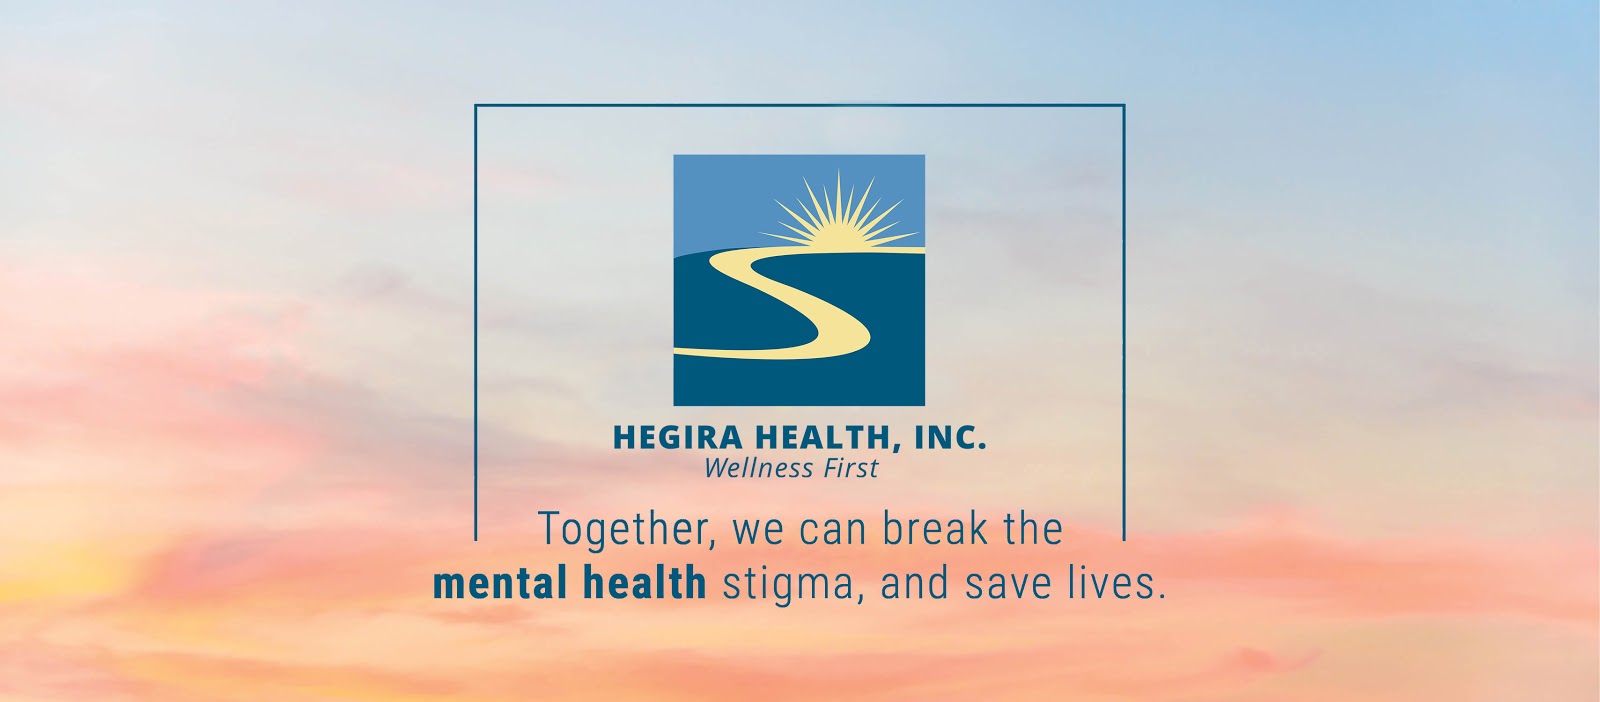 Hegira Health - Next Step Clubhouse